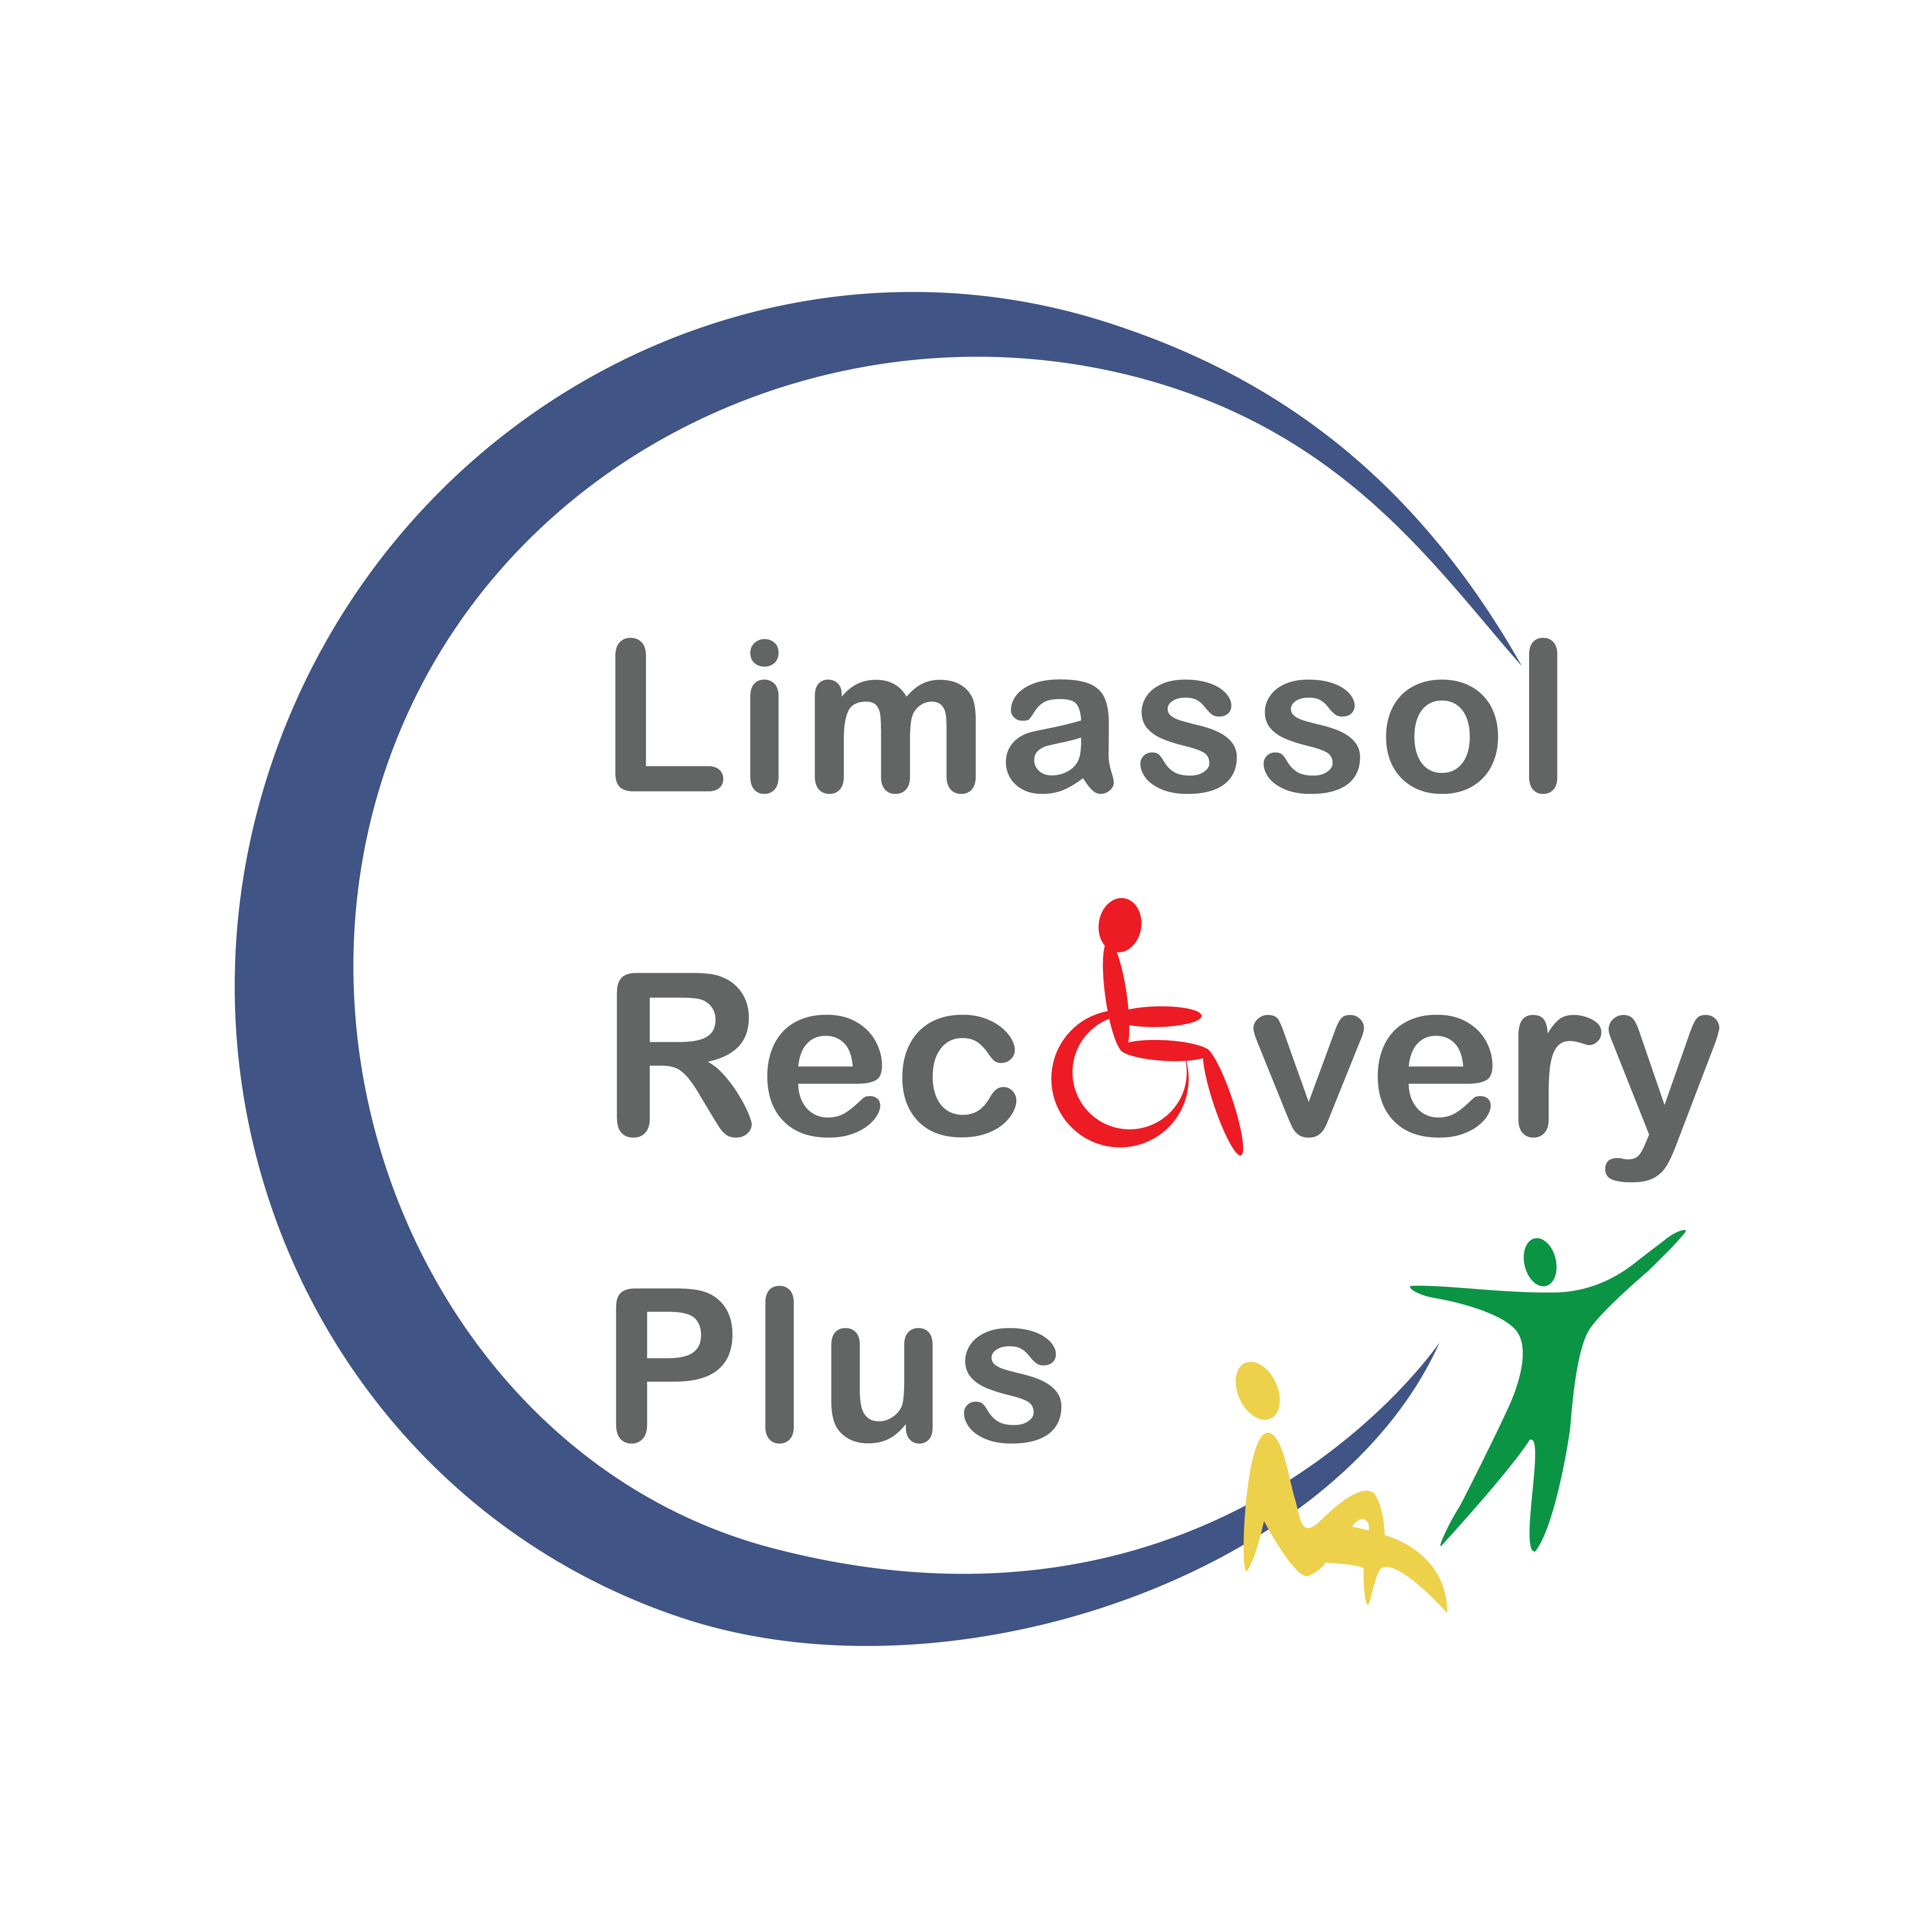 Limassol Recovery Plus